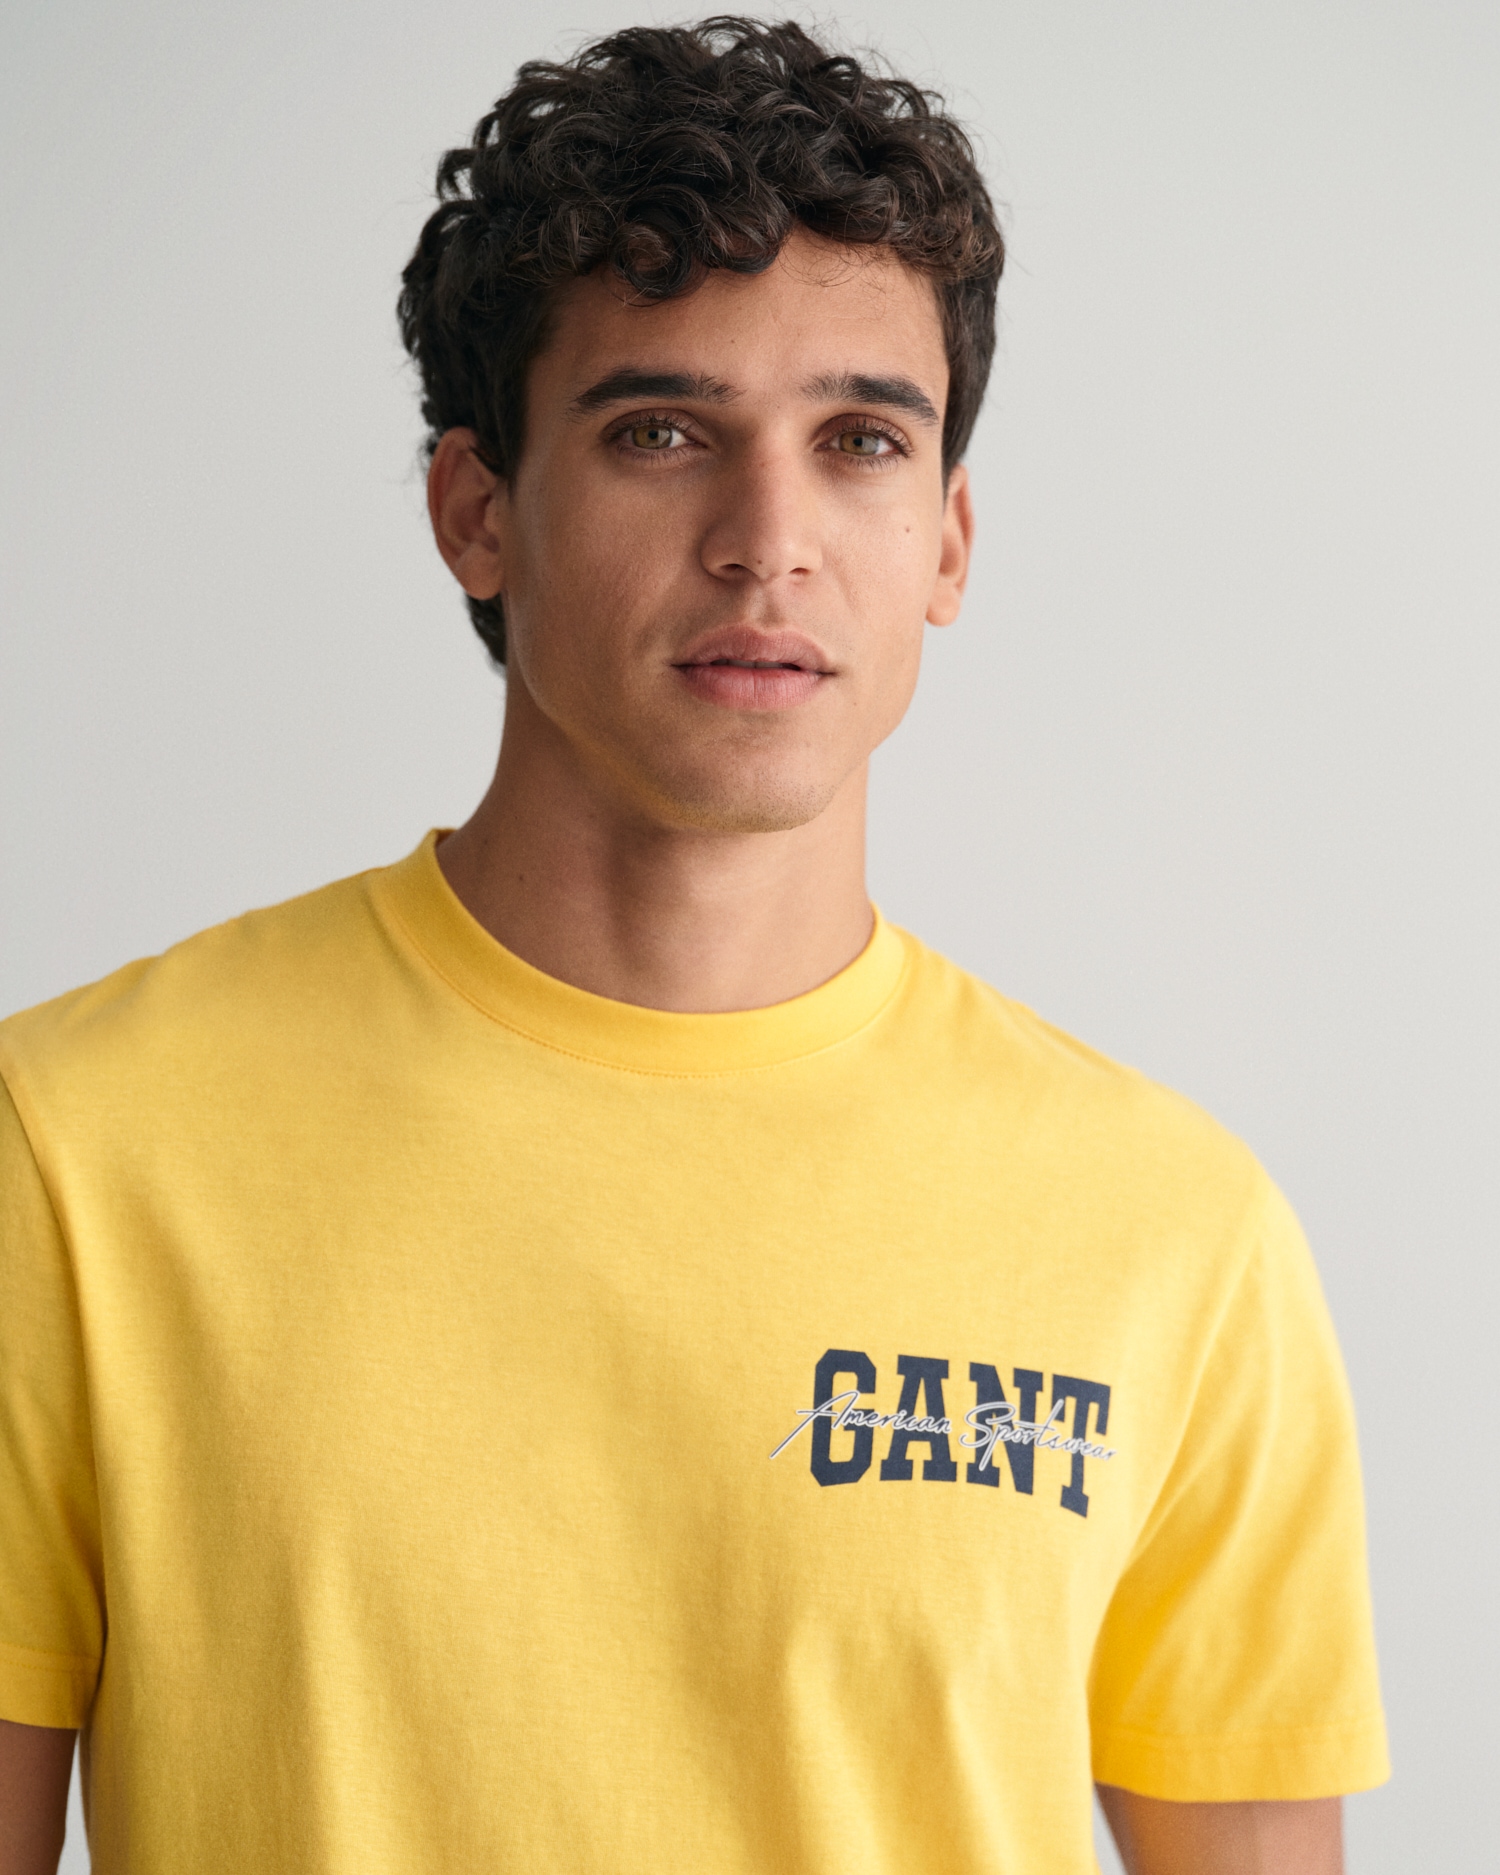 Gant T-Shirt »GANT Arch Script Graphic T-Shirt«, mehrfarbiger Print